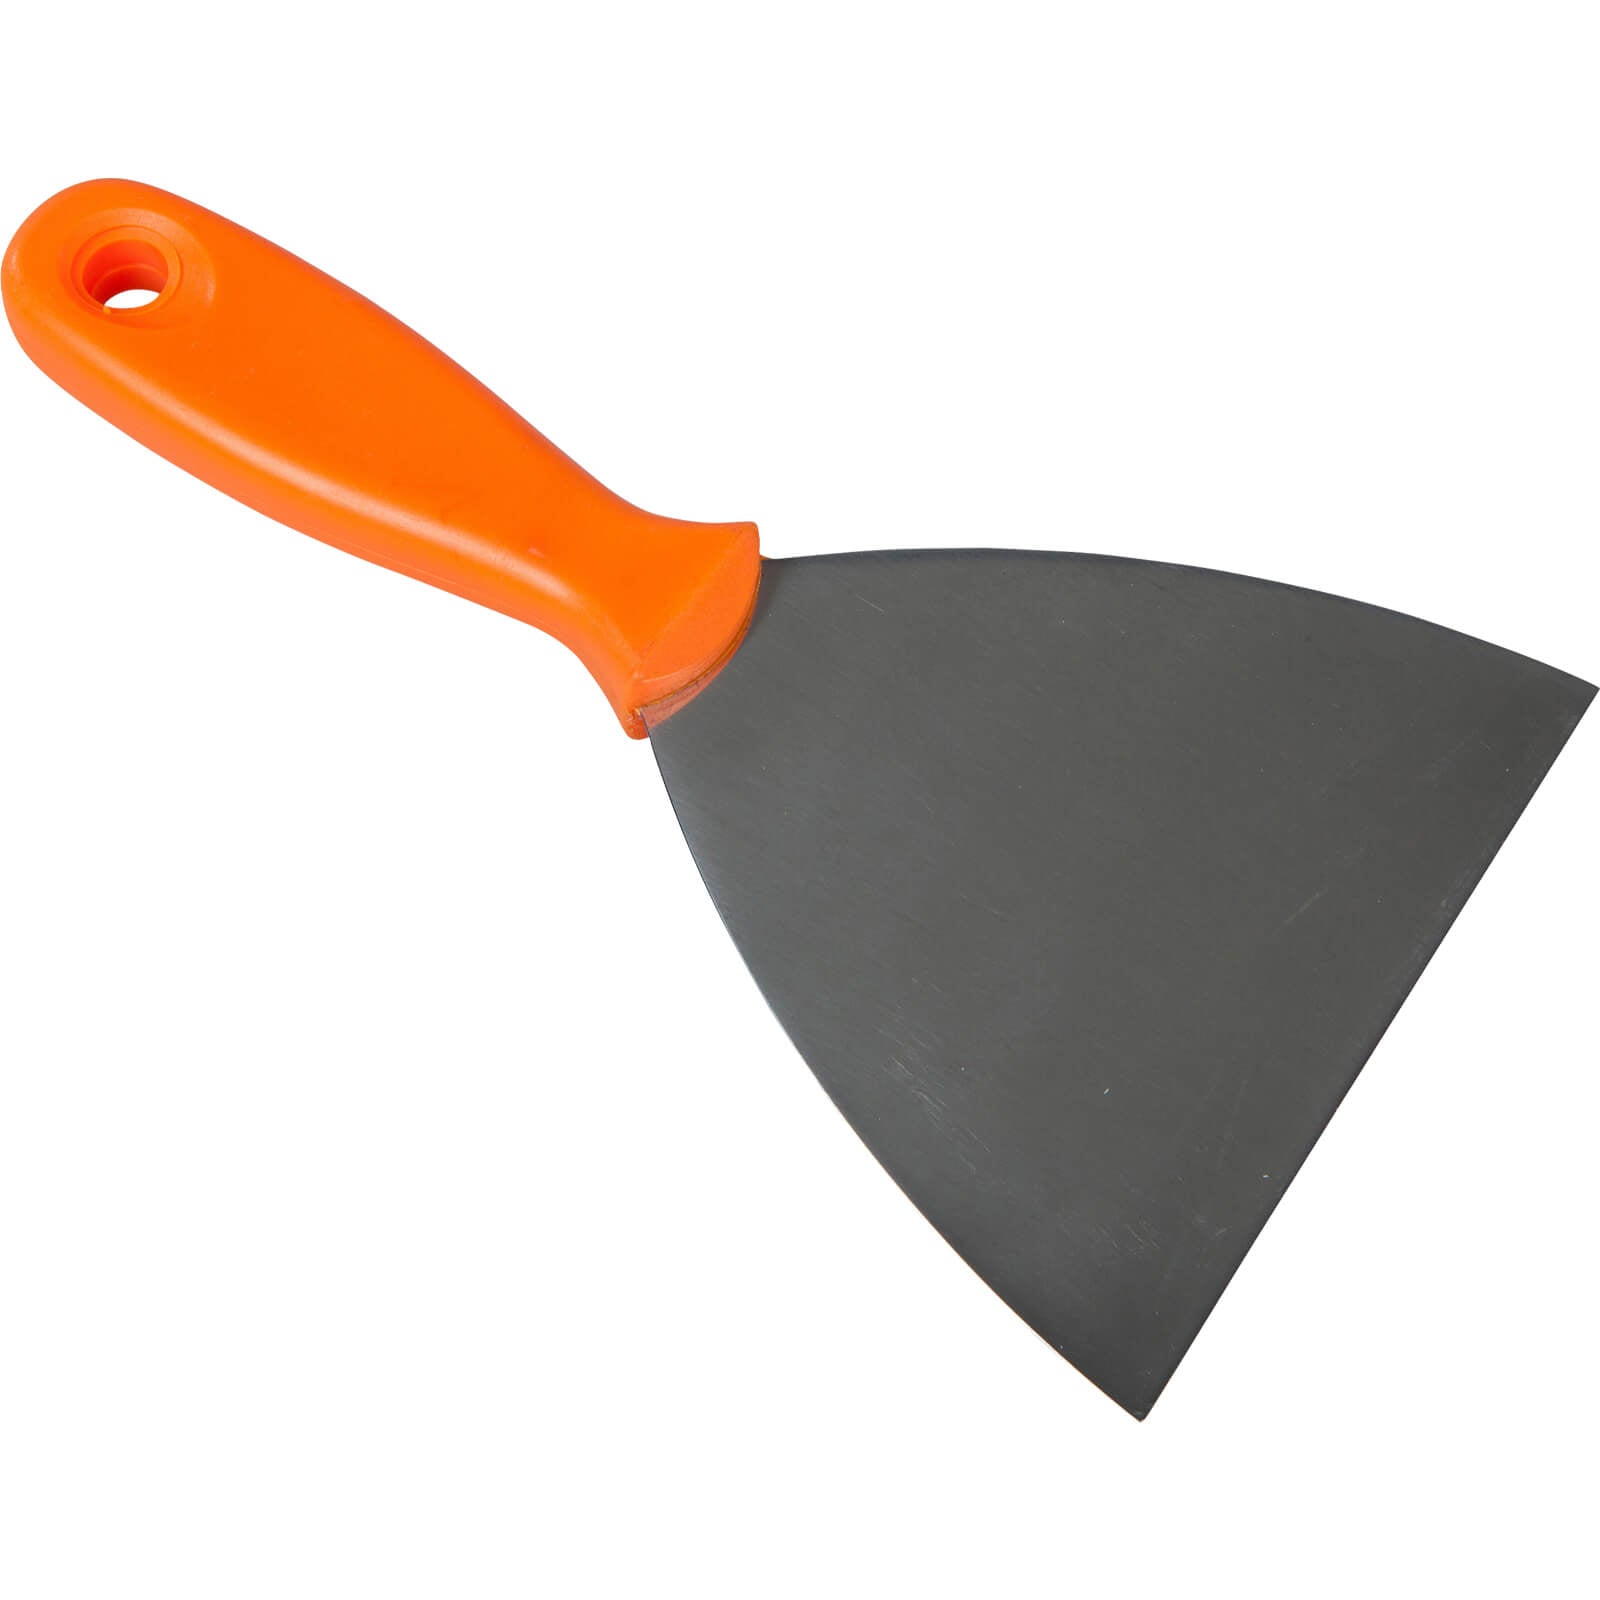 Raschietto Manuale- Lama Acciaio Inox - Flessibile - 120mm Arancio